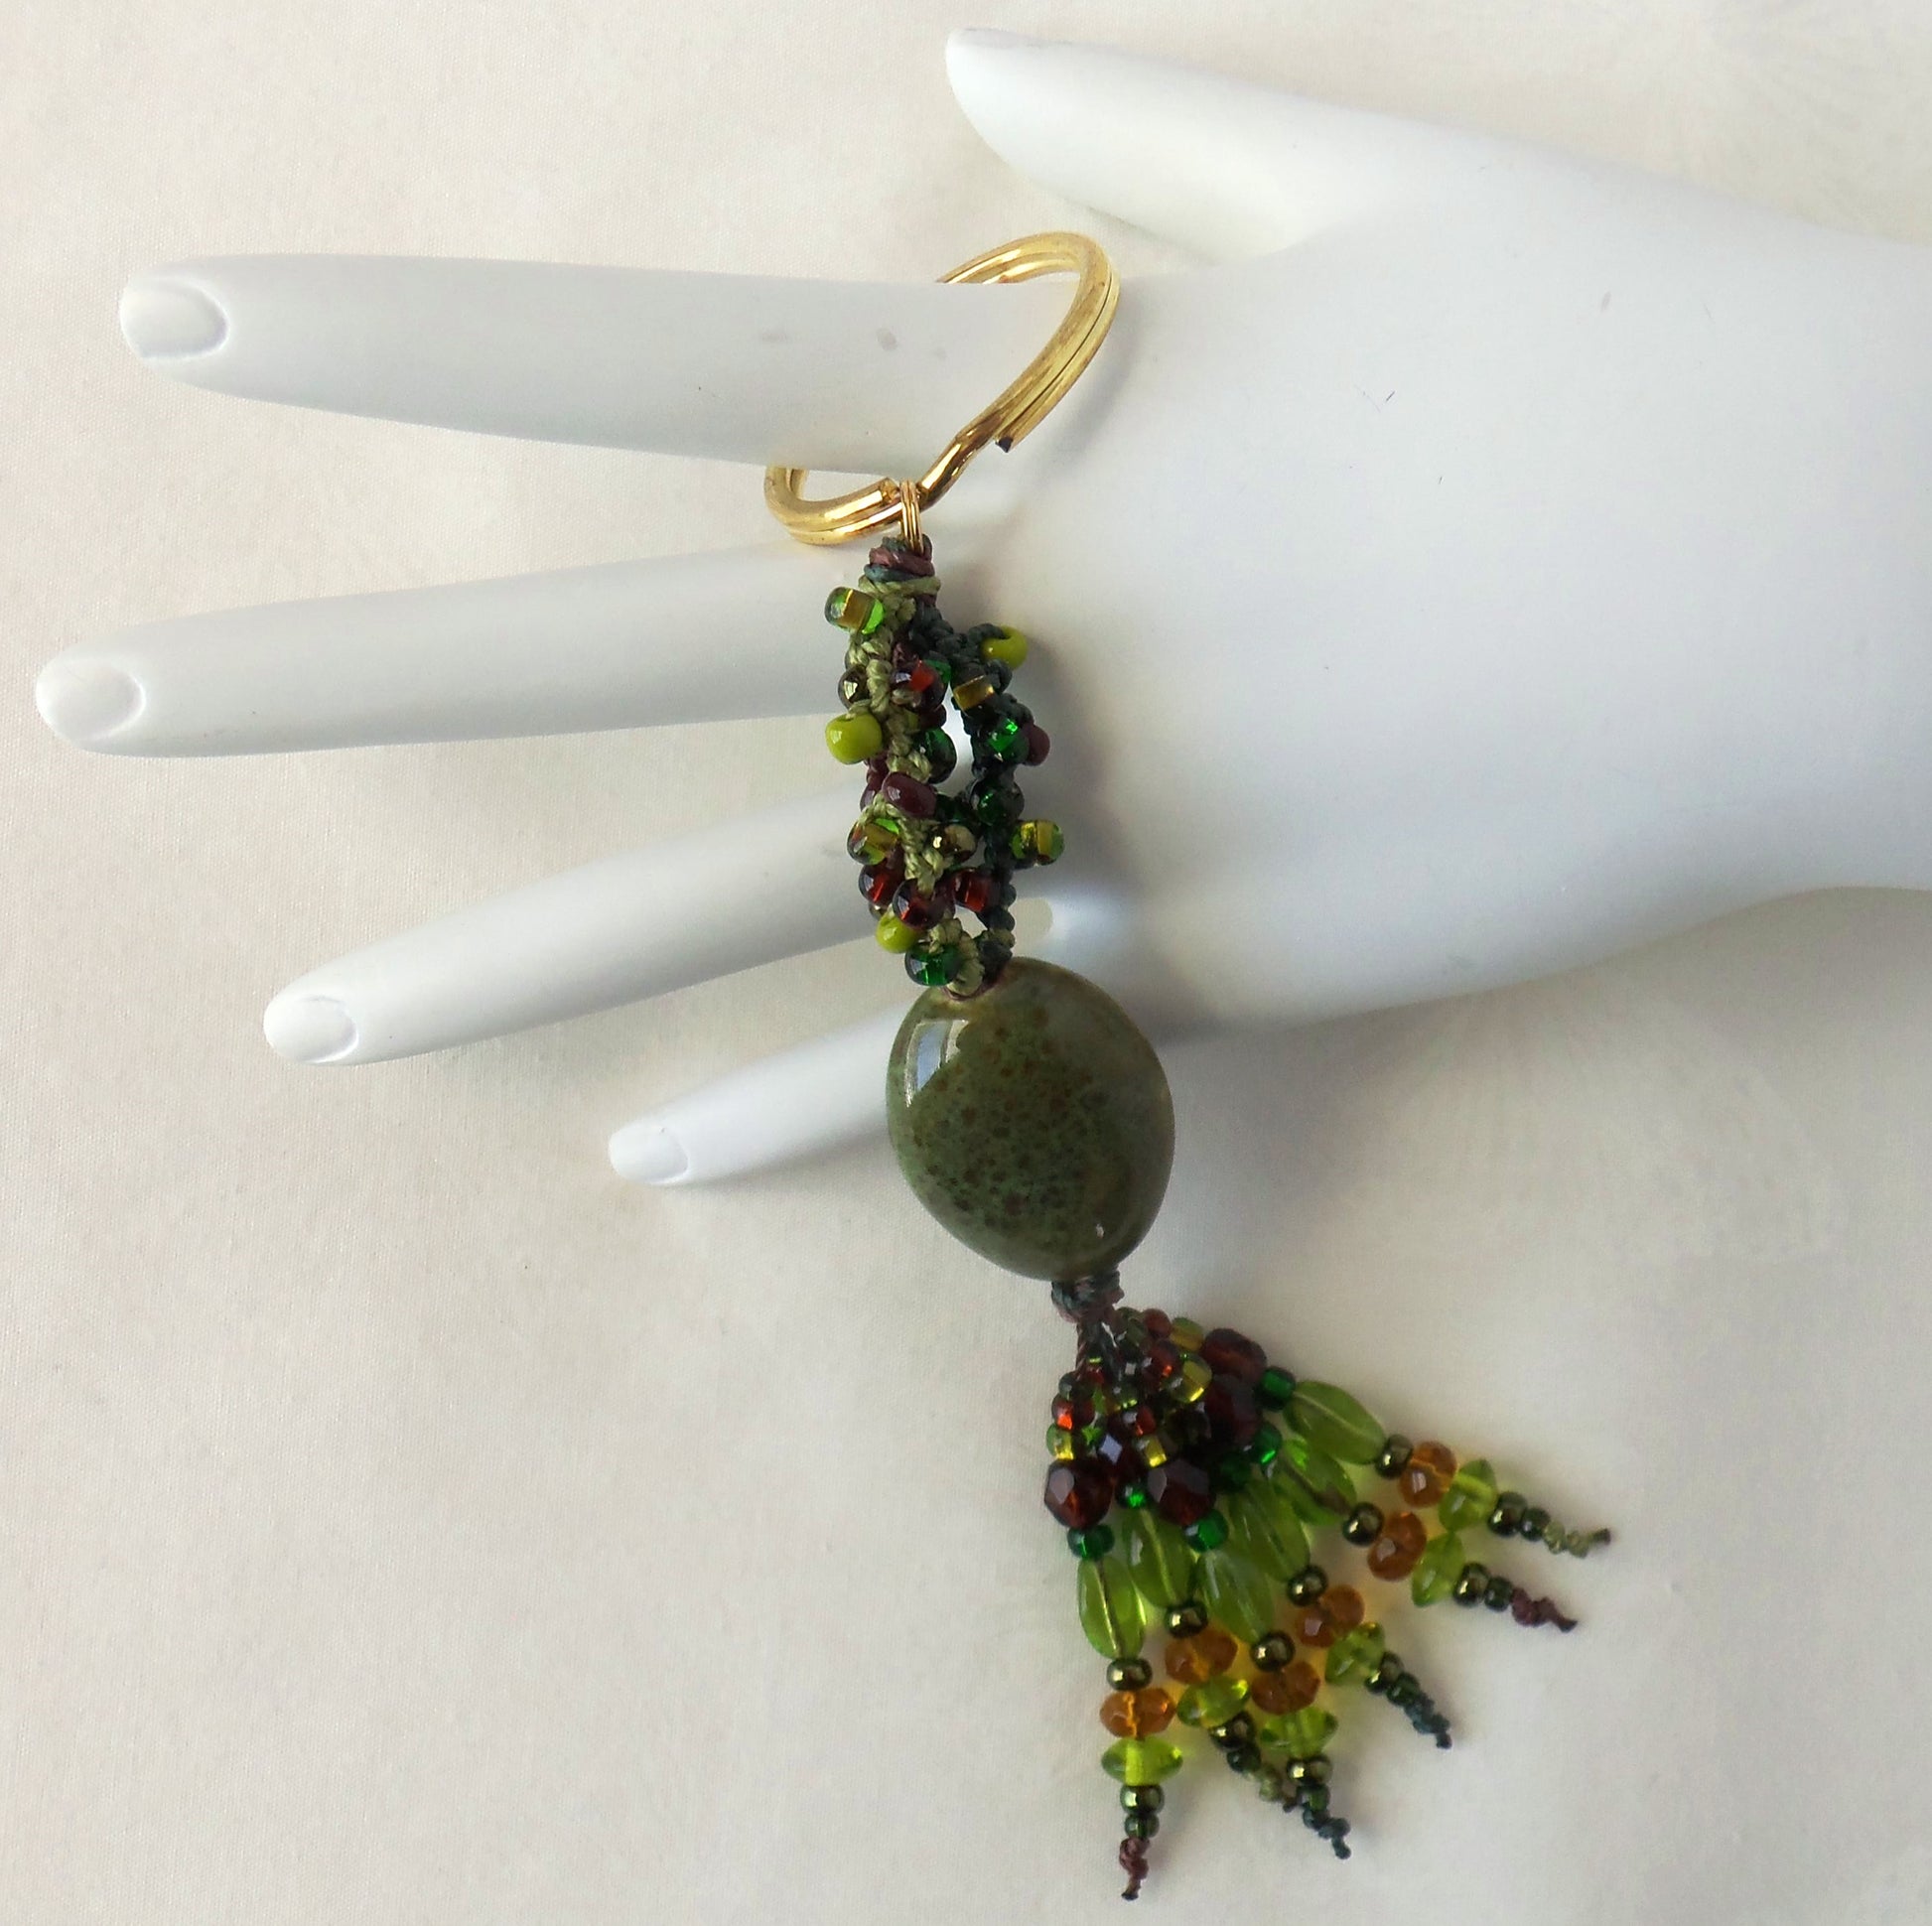 Green & Brown Beaded Keychain - Juicybeads Jewelry